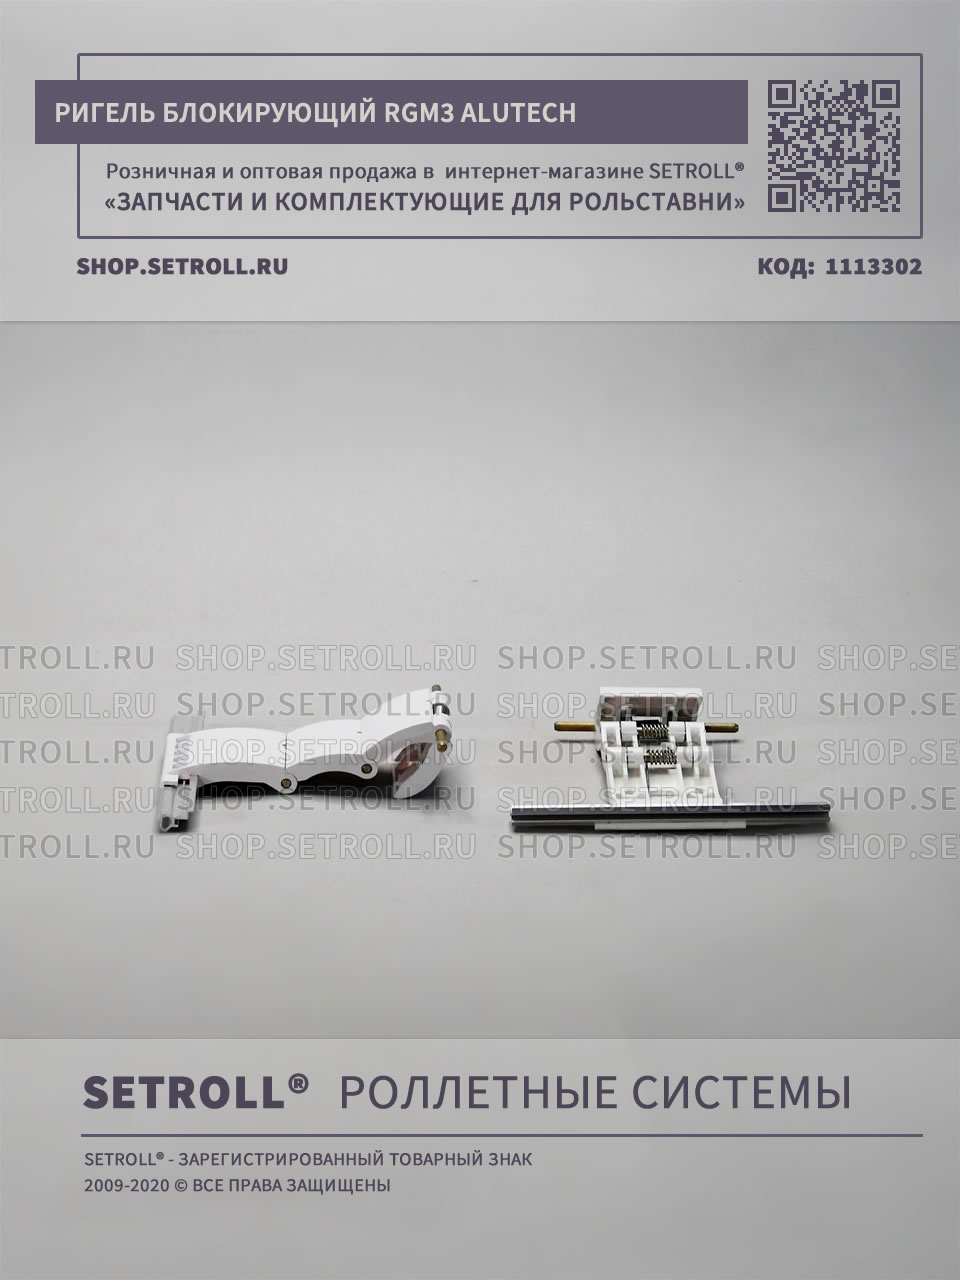 rgm3-alutekh-size-shop.setroll.ru